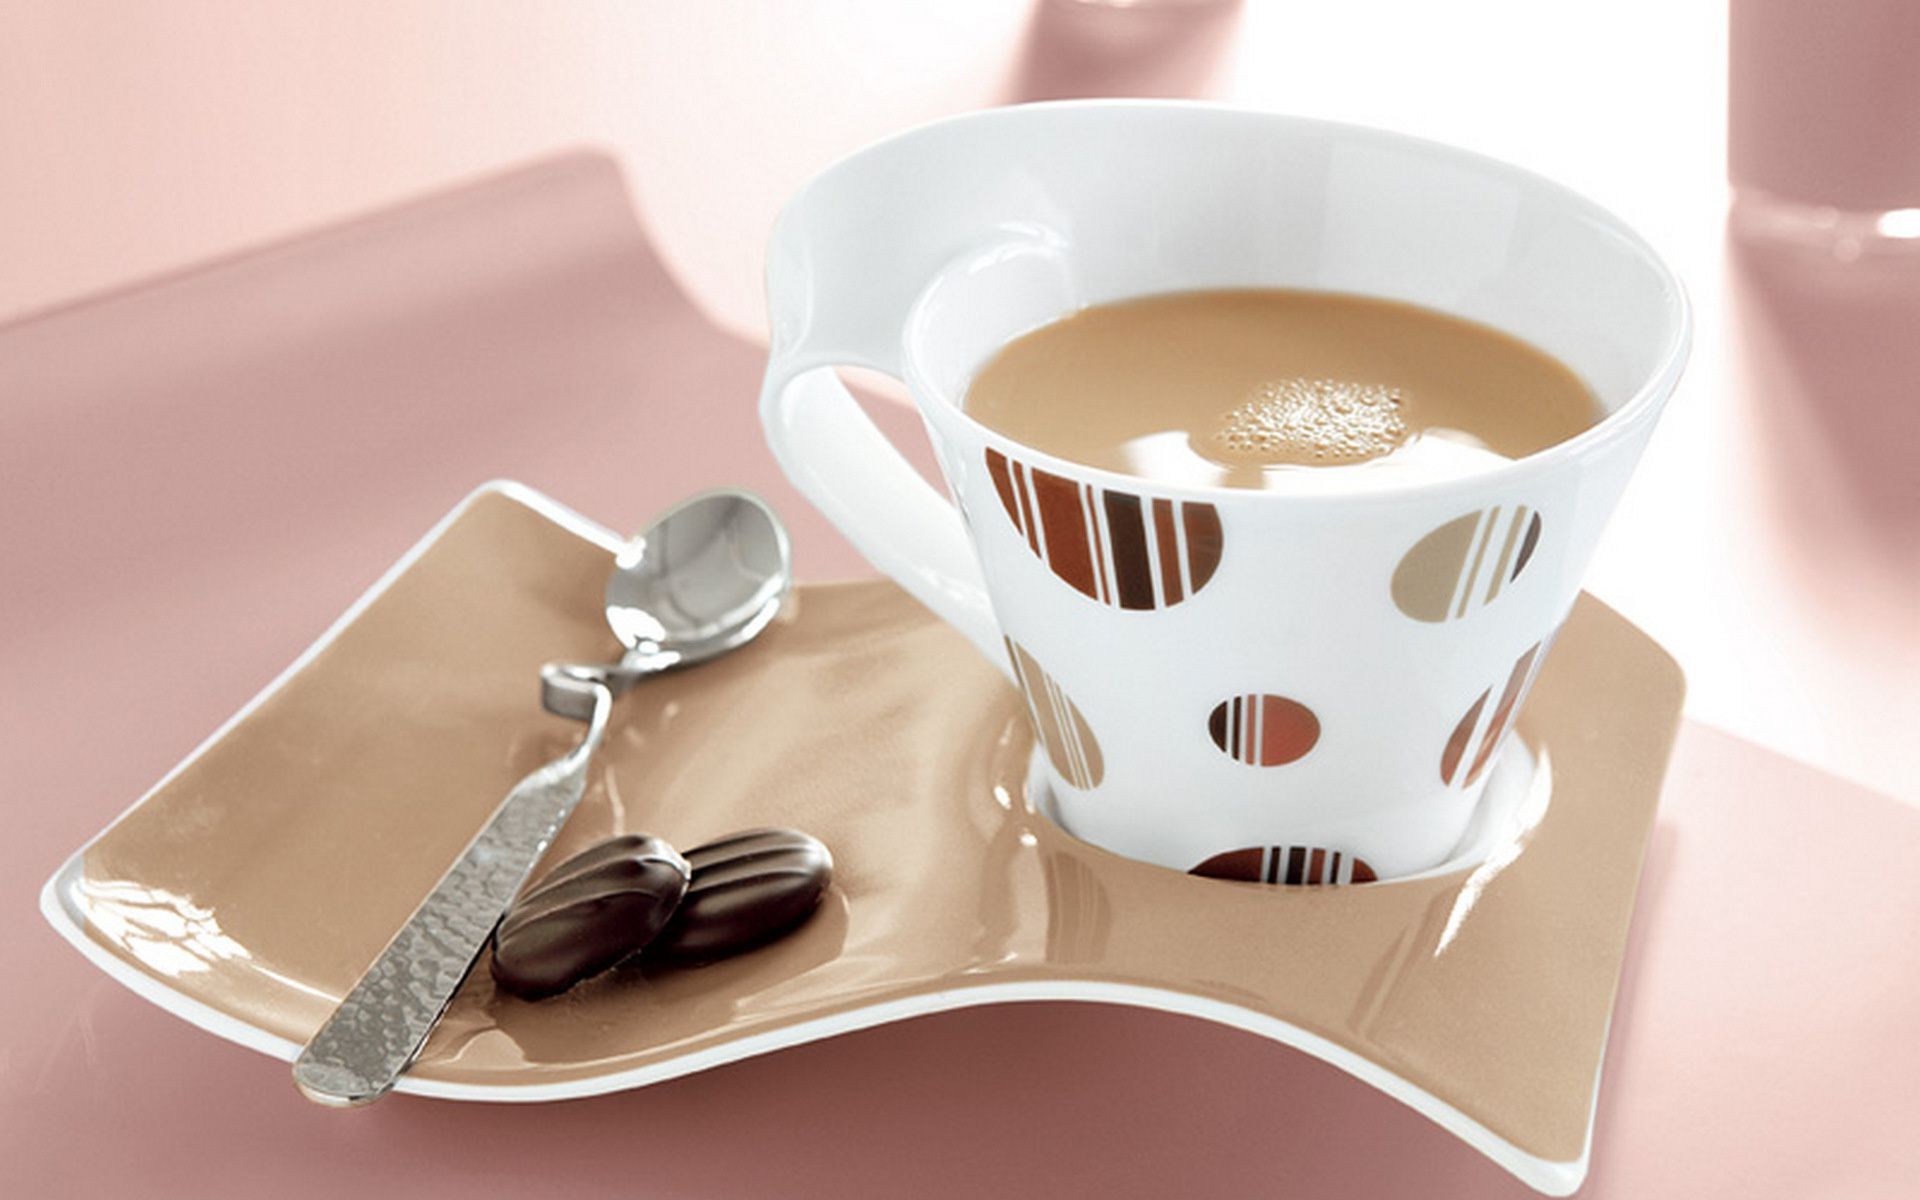 coffee cup drink dawn espresso breakfast tea mug caffeine table food spoon cappuccino saucer hot porcelain tableware milk